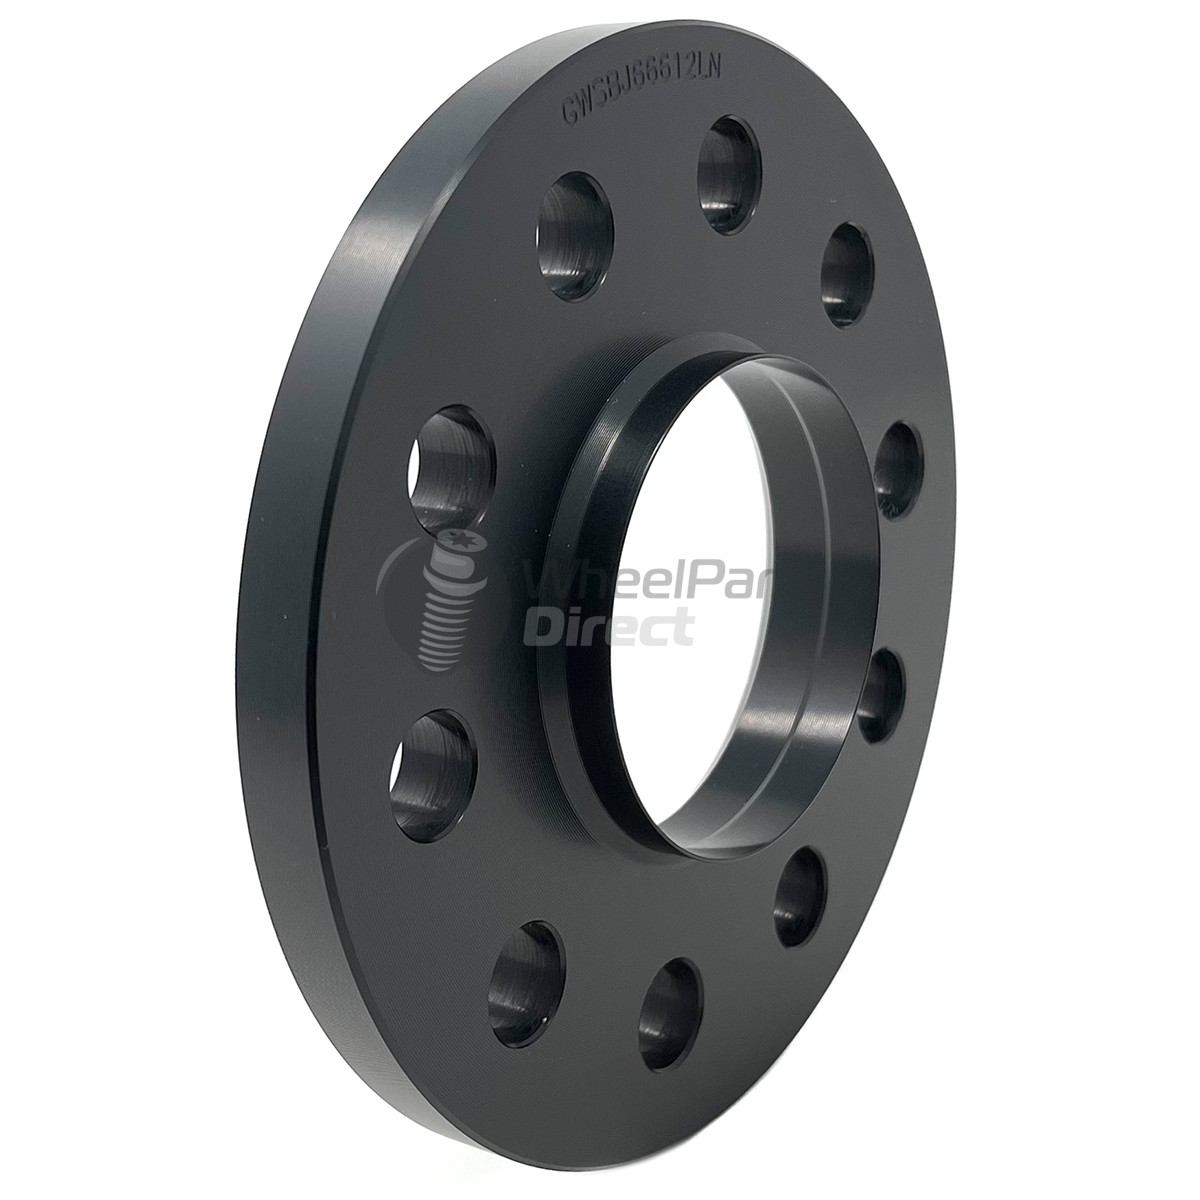 5x112 66.6 12mm GEN2 Black Wheel Spacers (LN)